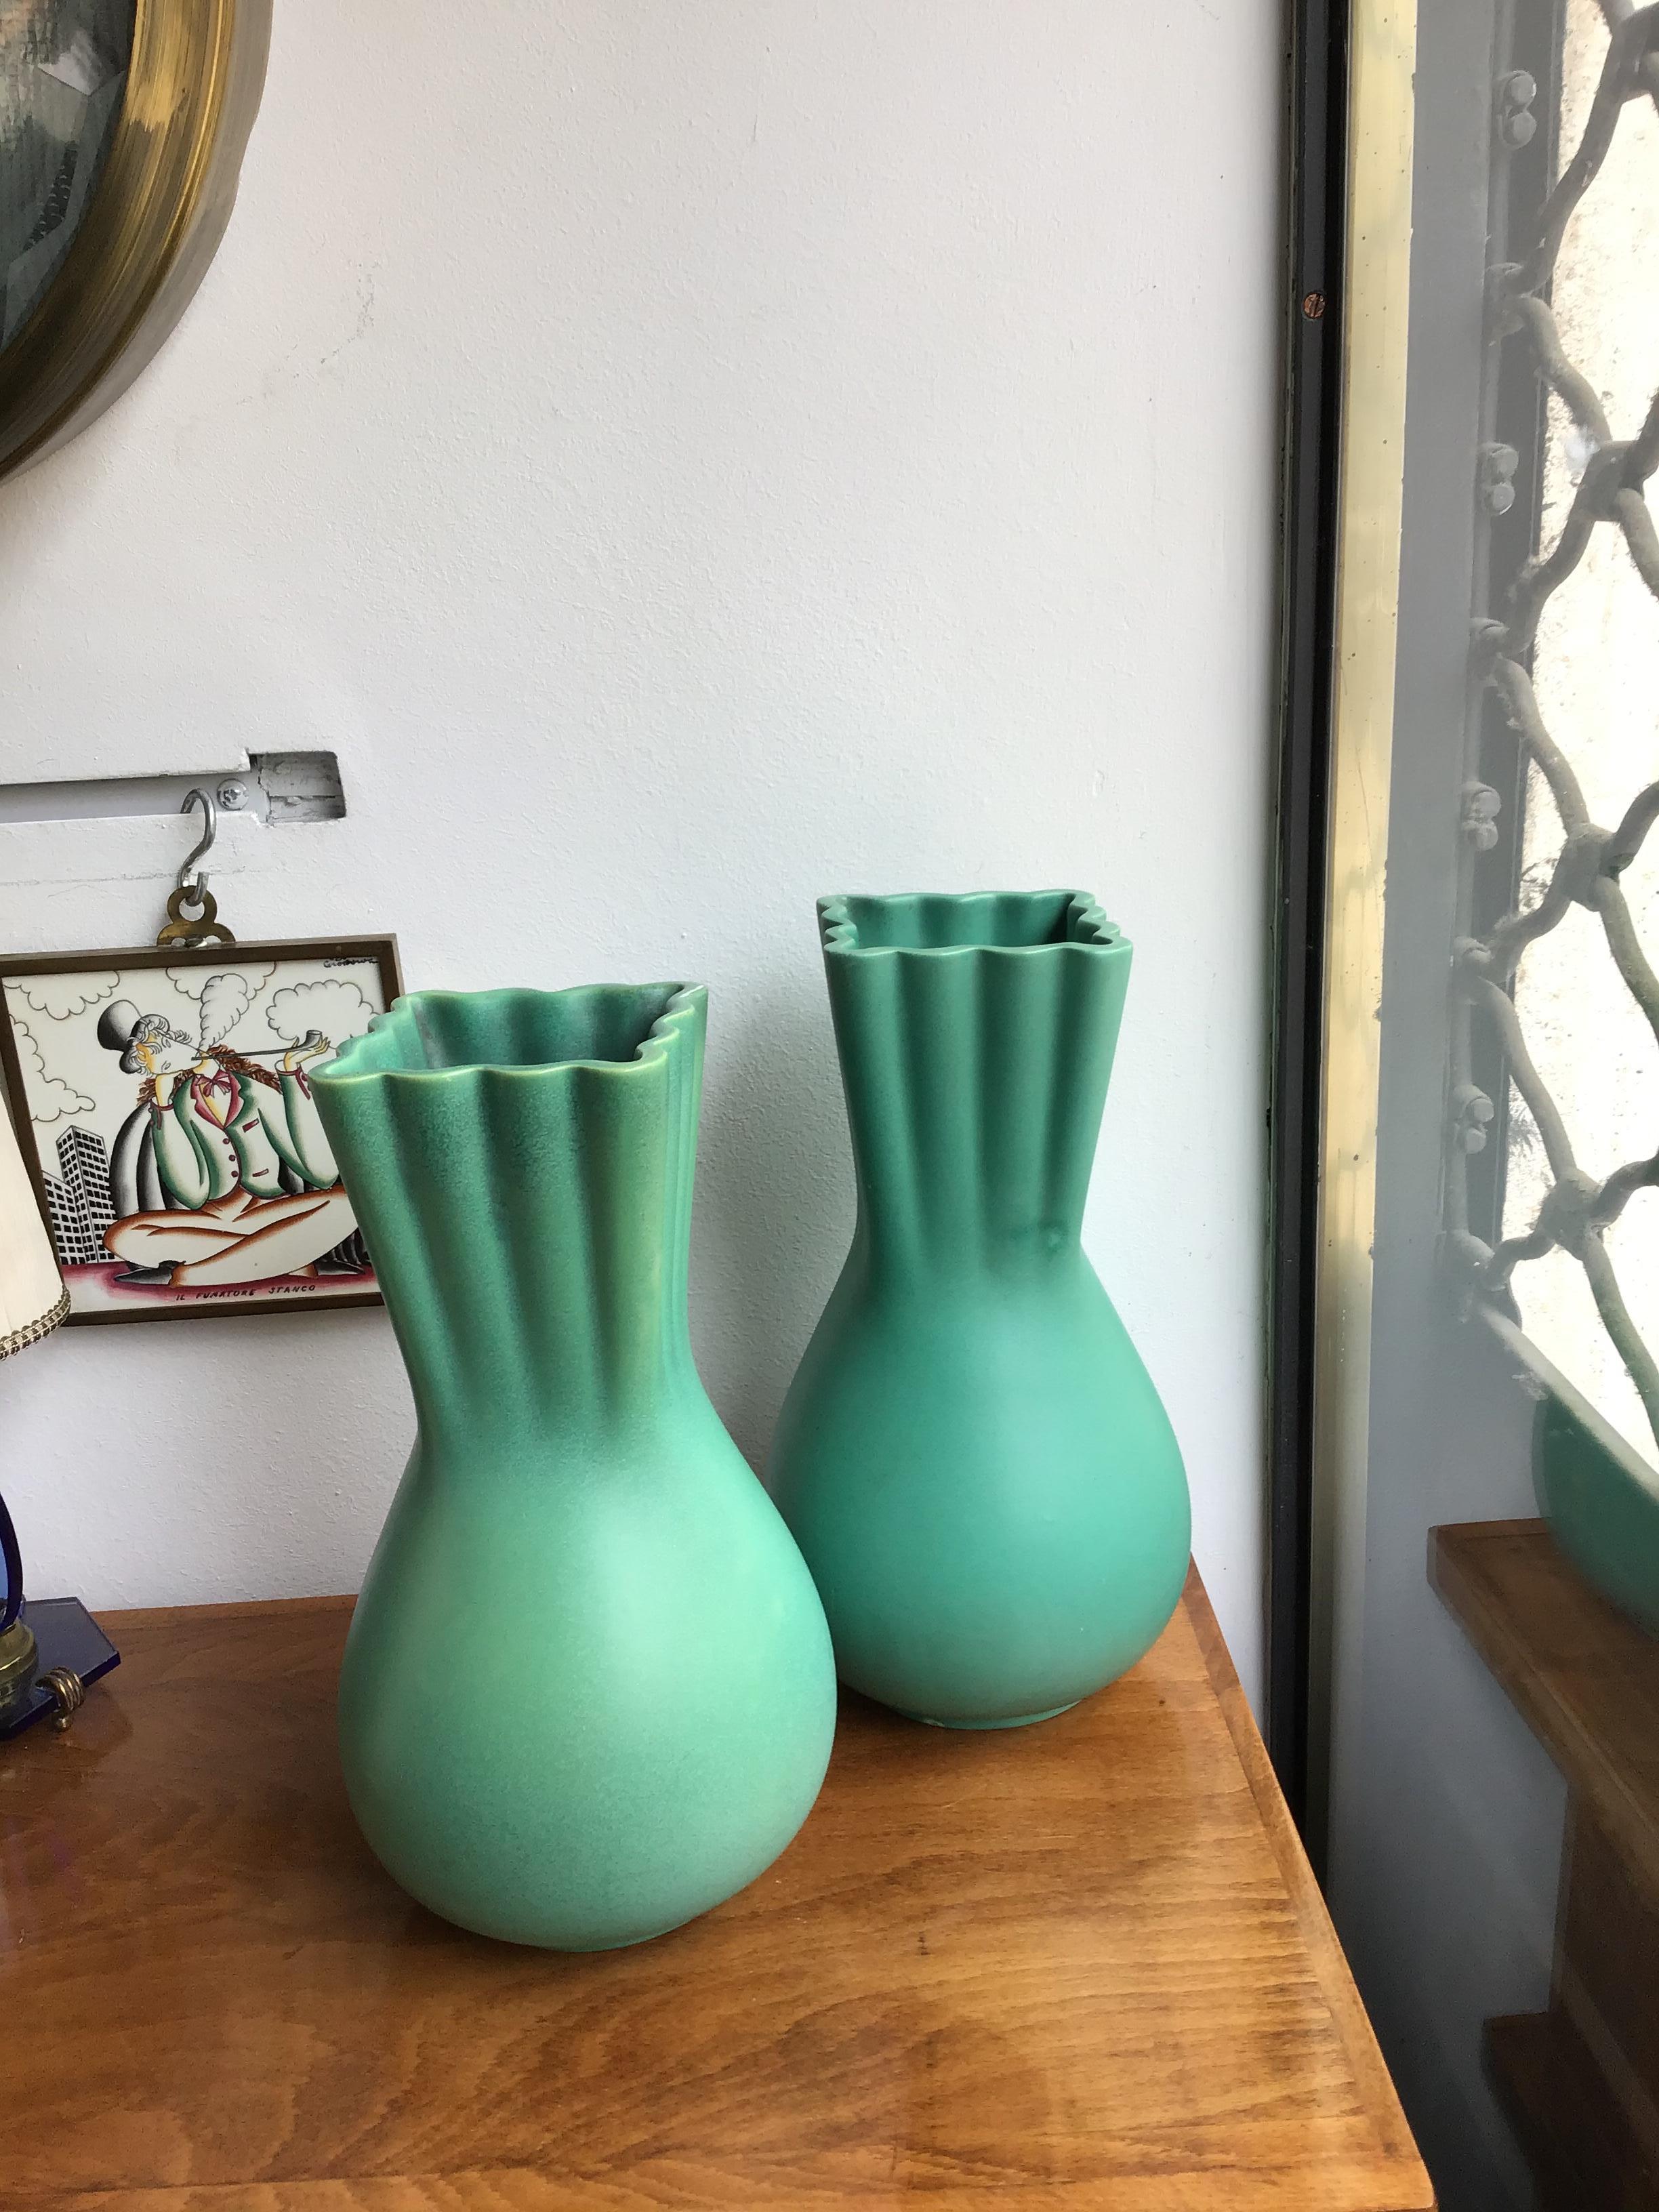 Richard Ginori Giovanni Gariboldi Green Vase Ceramic, 1950, Italy For Sale 5